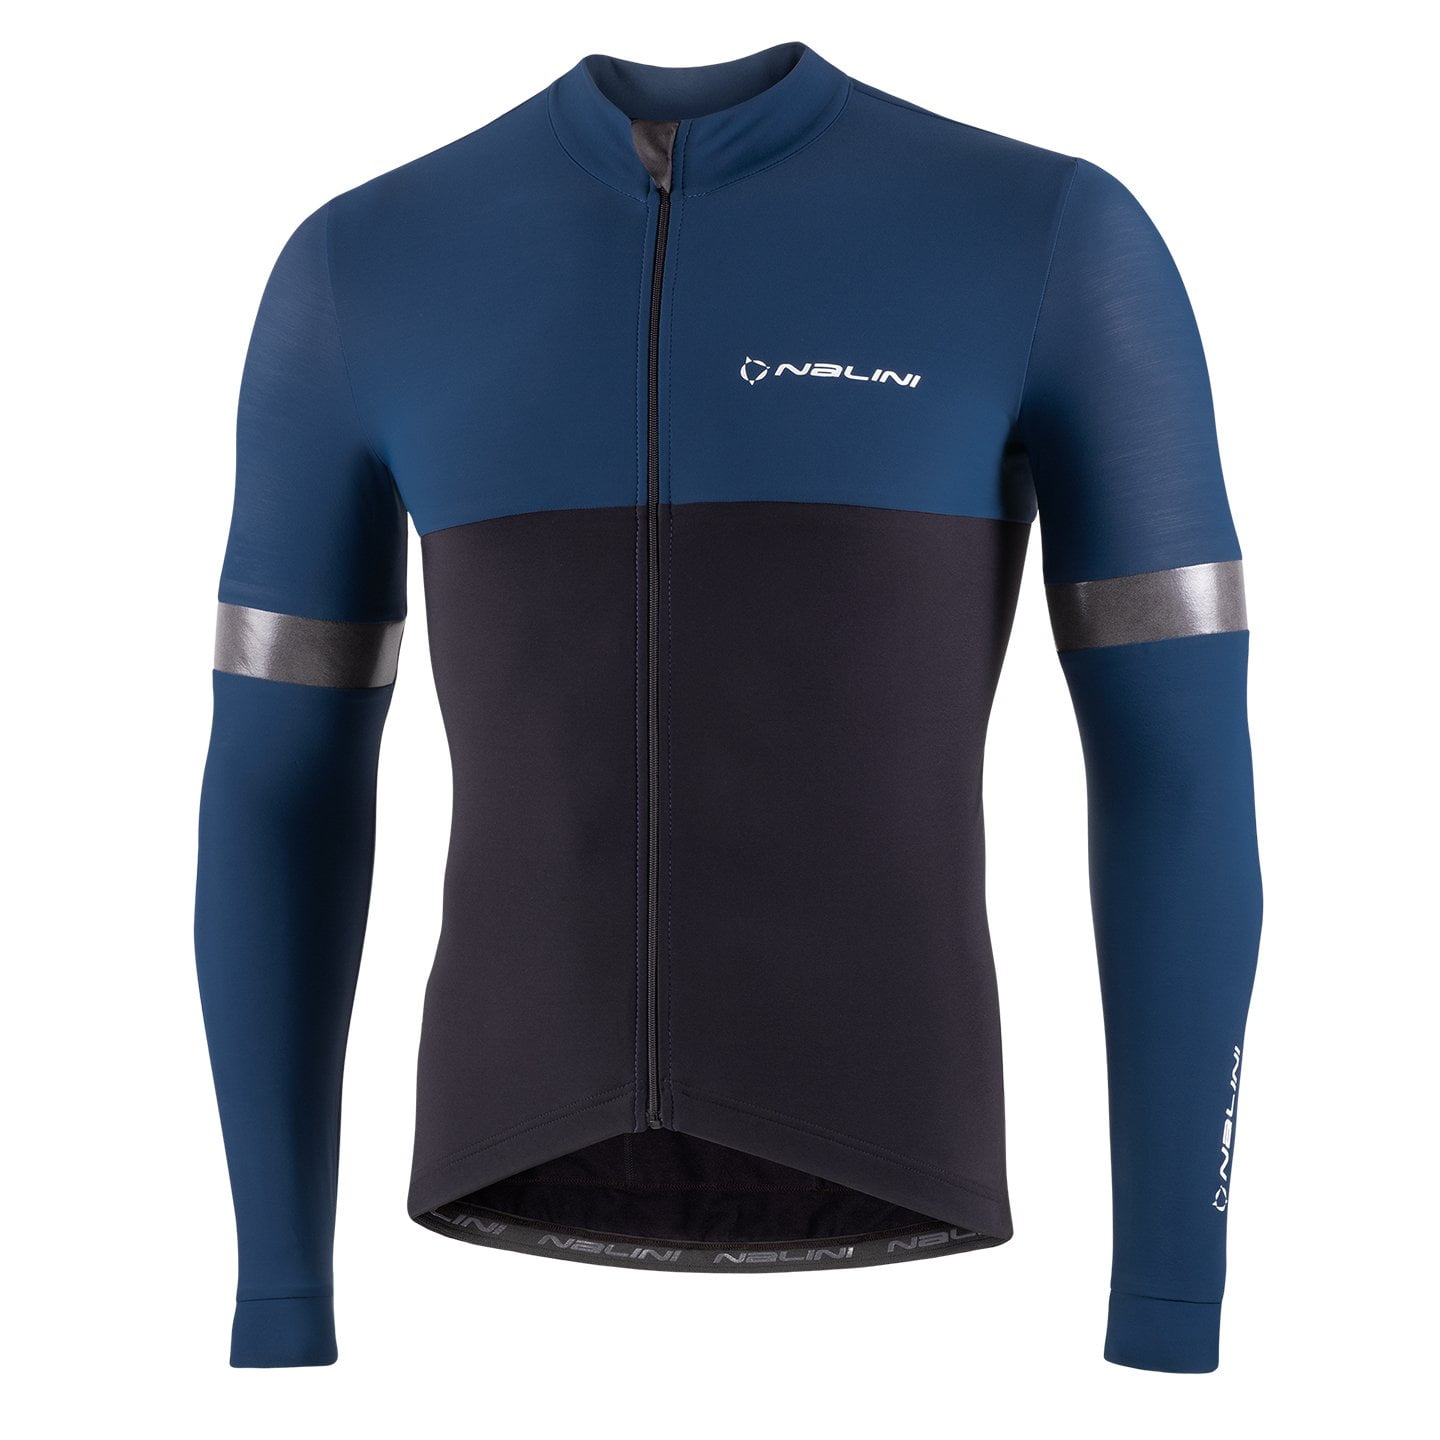 NALINI New Warm Reflex Long Sleeve Jersey Long Sleeve Jersey, for men, size L, Cycling jersey, Cycling clothing